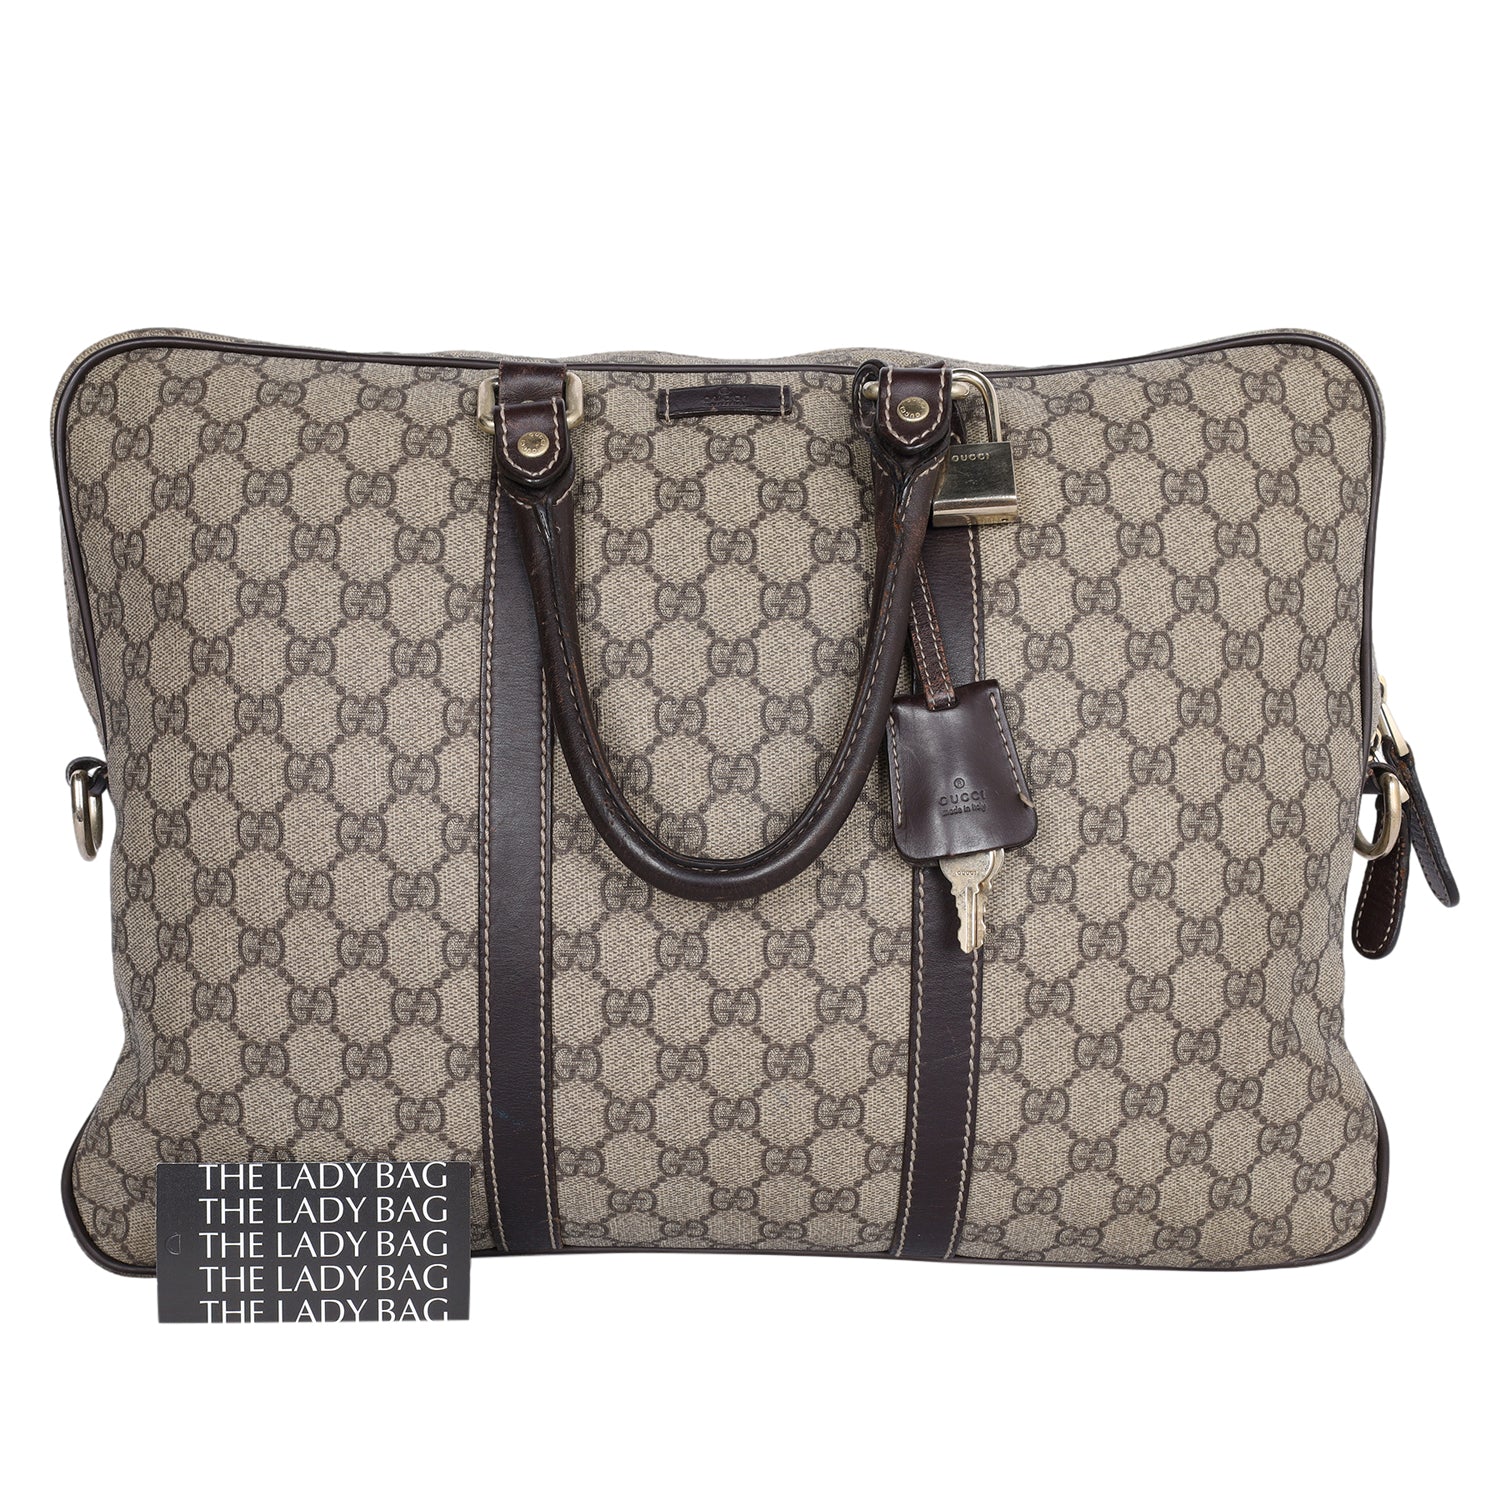 Authentic Gucci Men Bags:, Gucci Briefcases, Gucci Men Bags